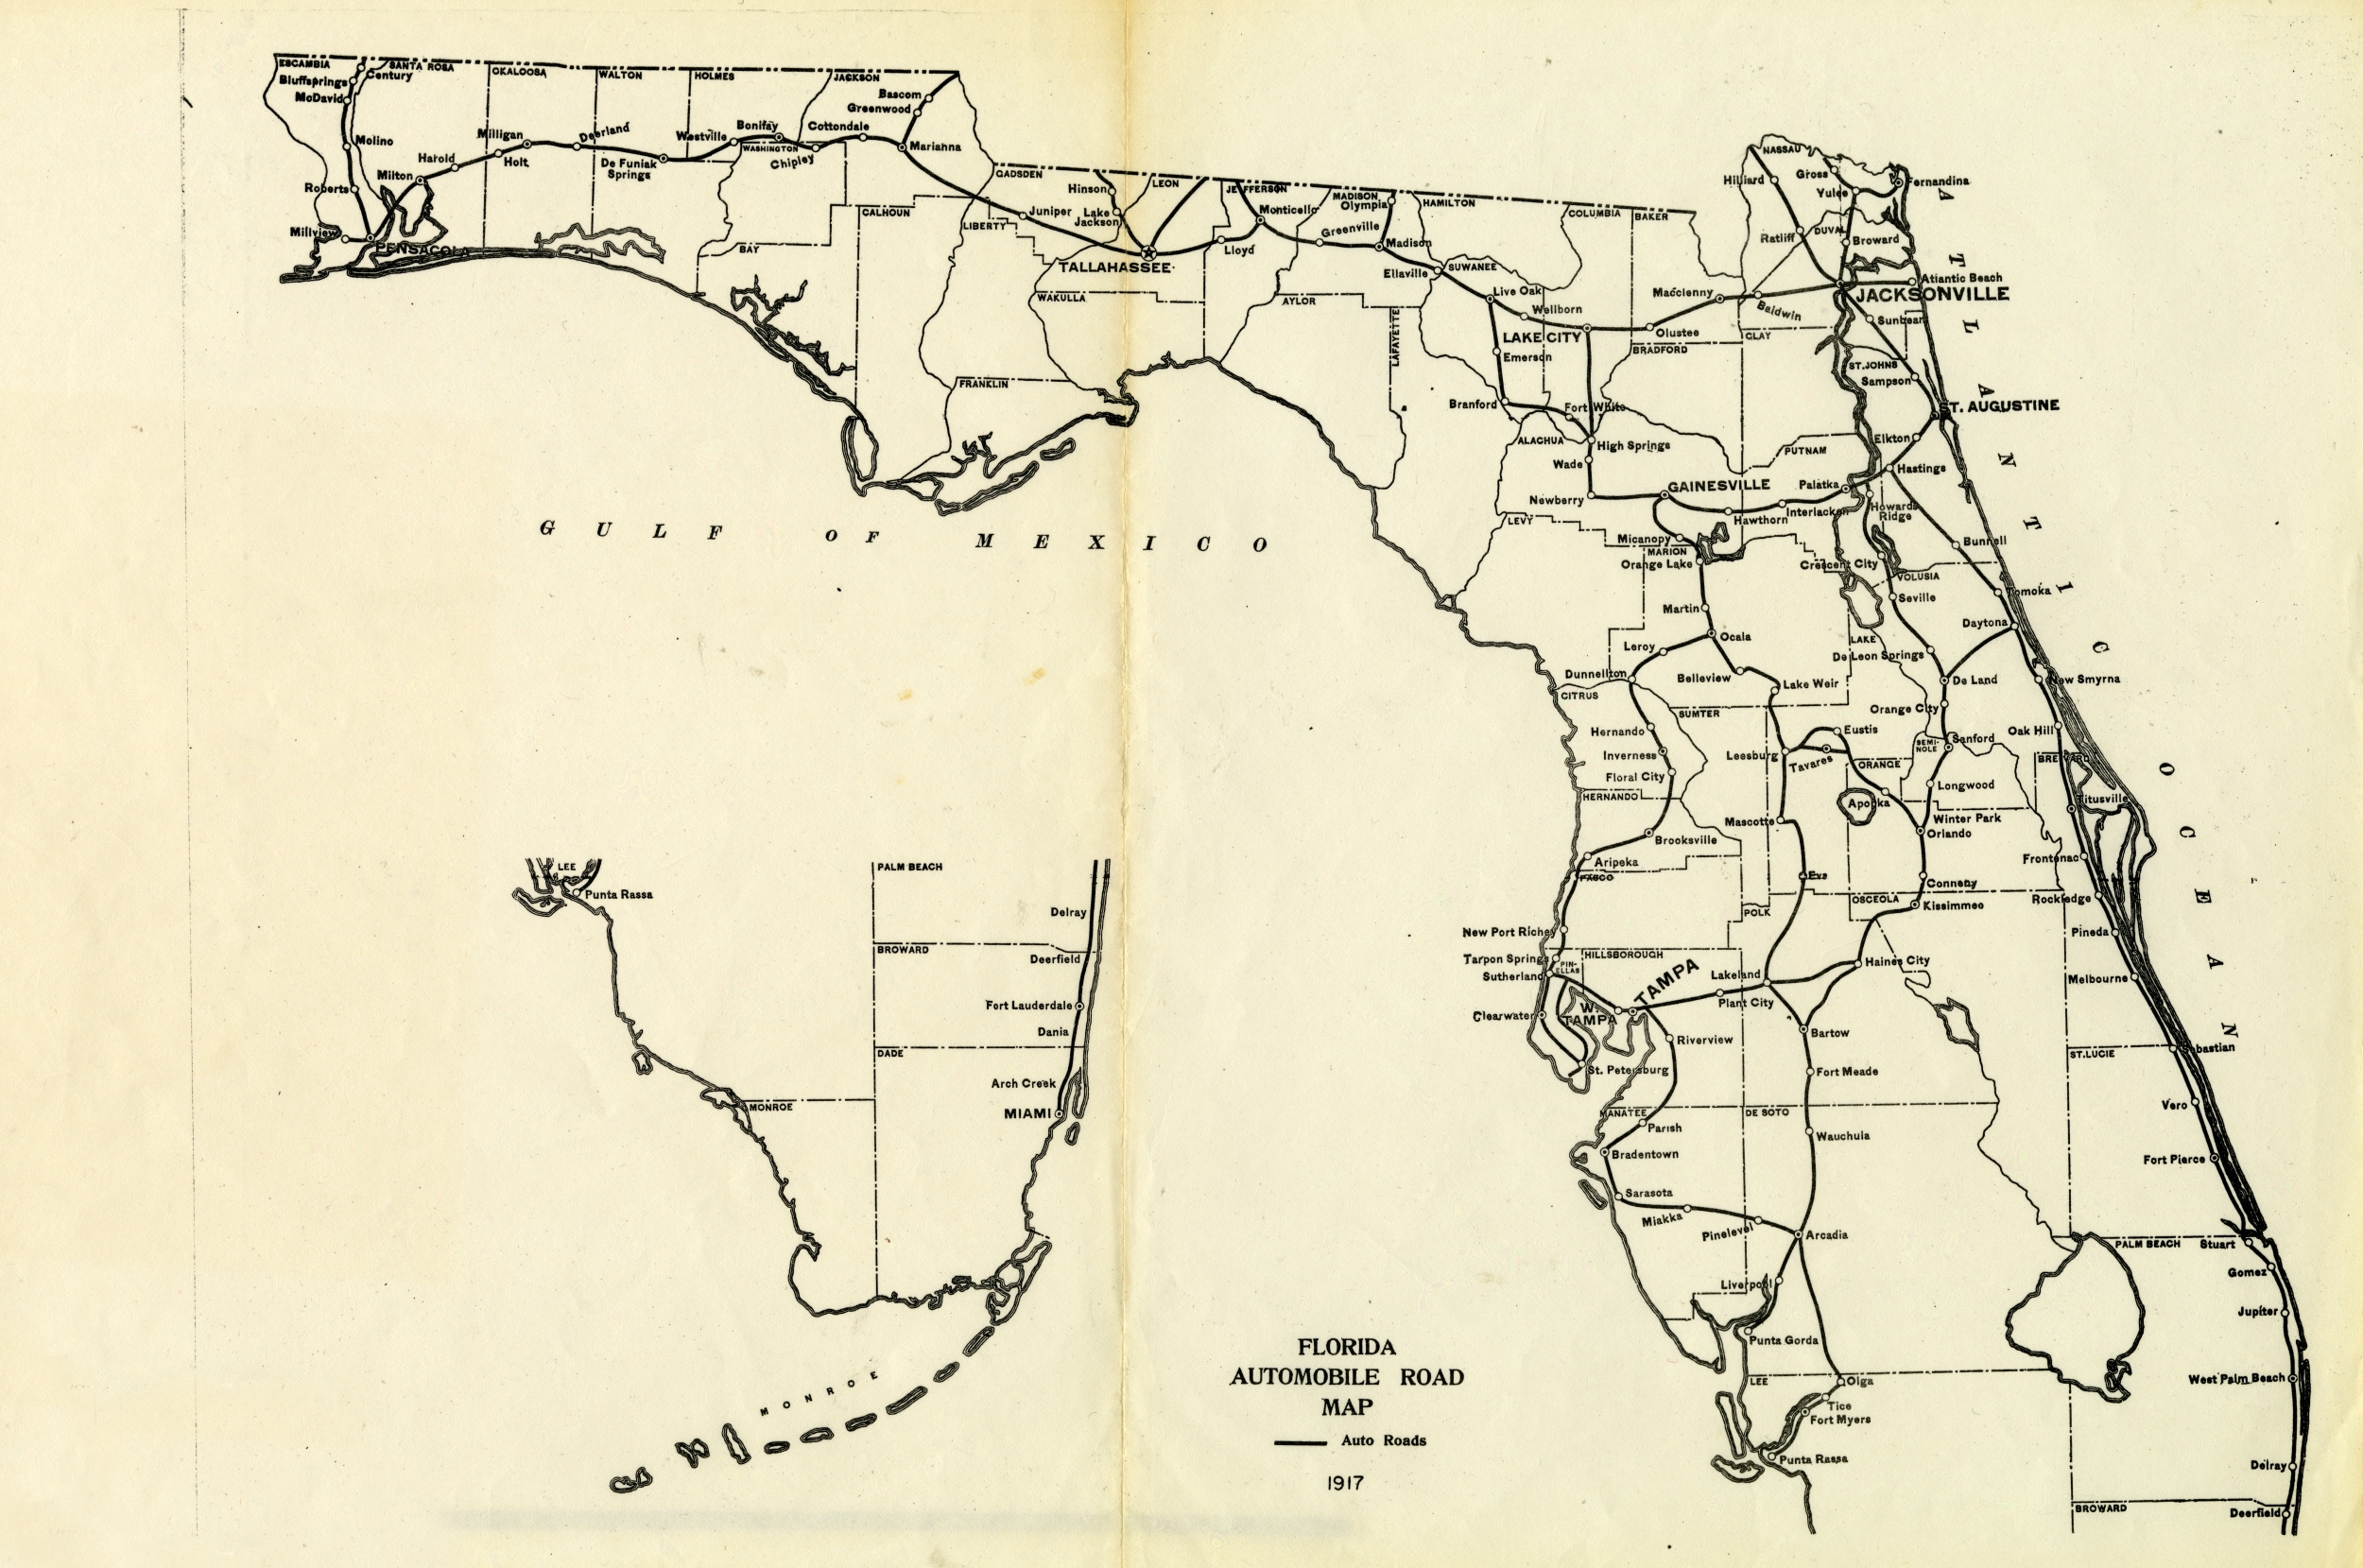 Florida Automobile Road Map, 1917